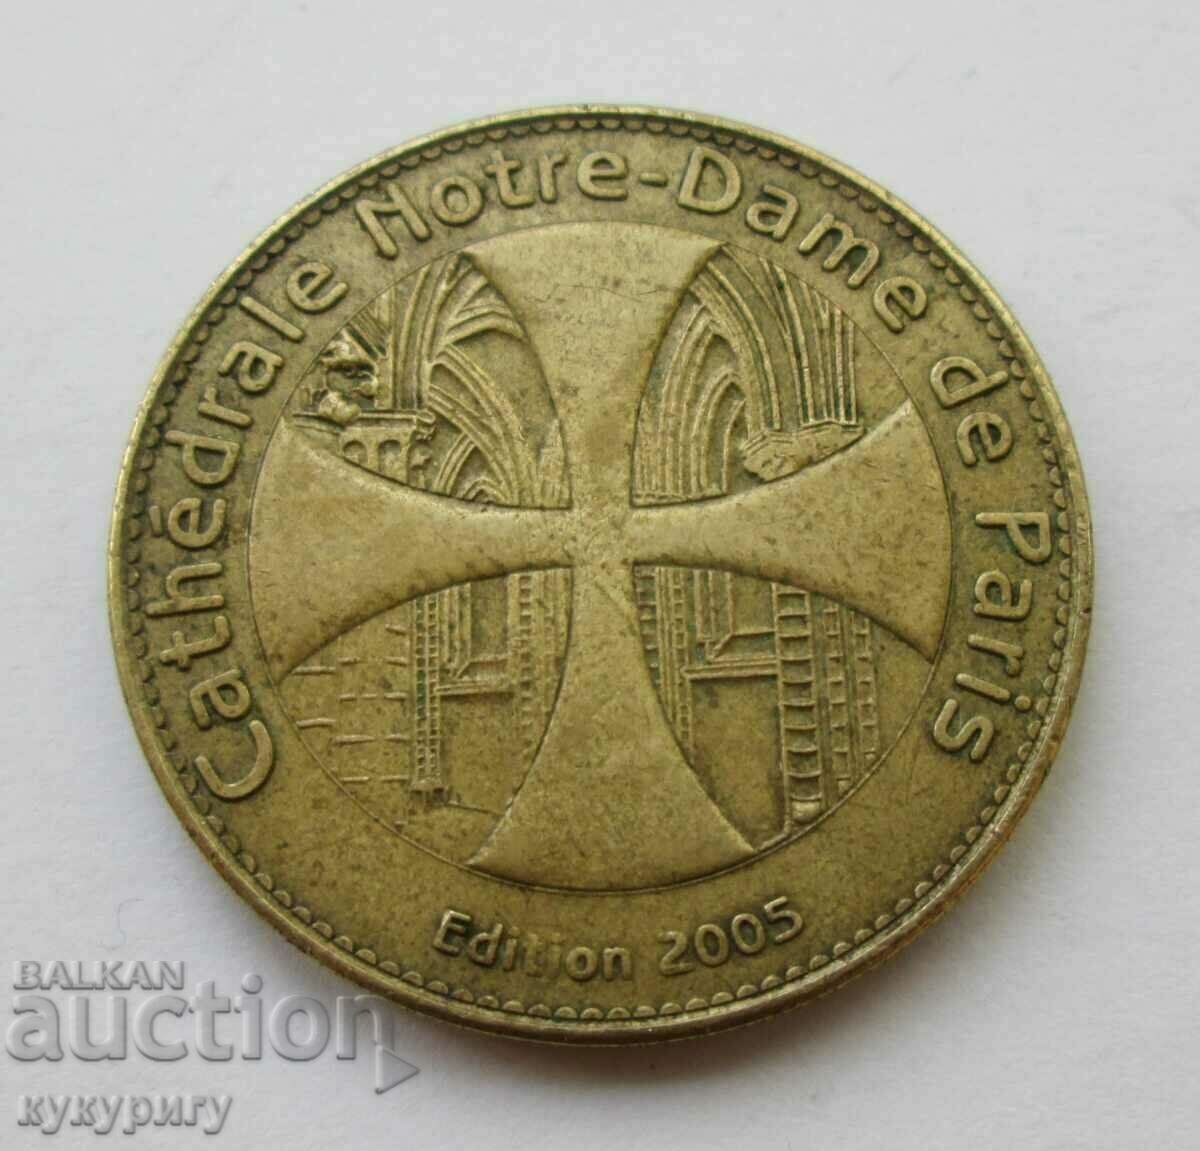 Church token from Notre Dame - Paris Saint Mary